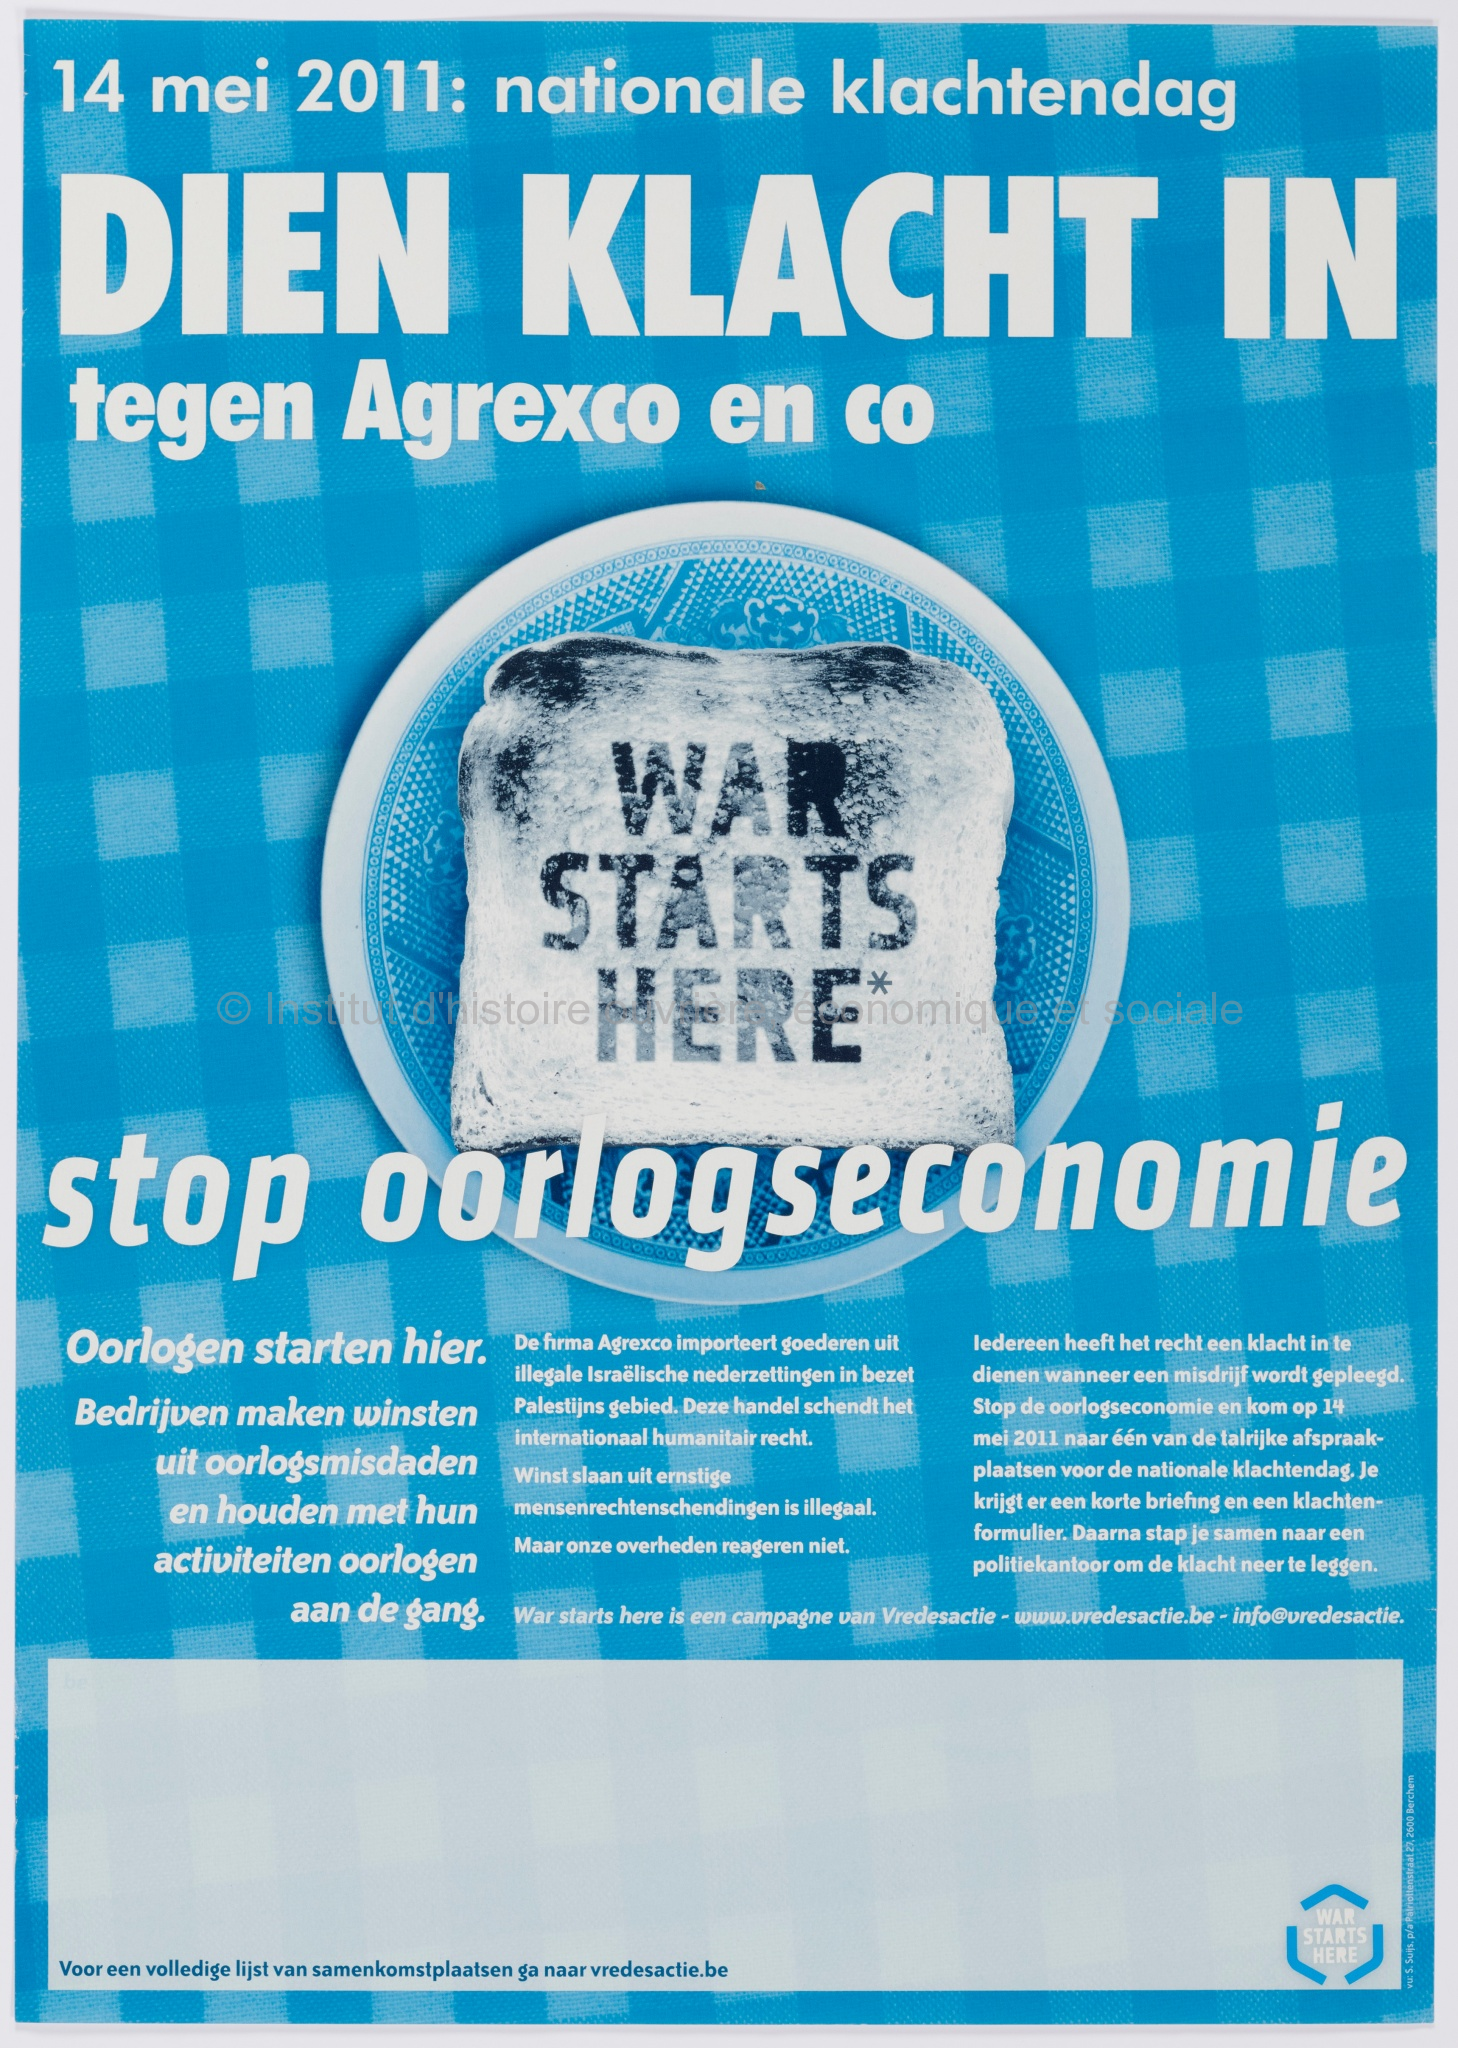 Dien klacht in tegen Agrexco en co : stop oorlogseconomie : 14 mei 2011, nationale klachtendag